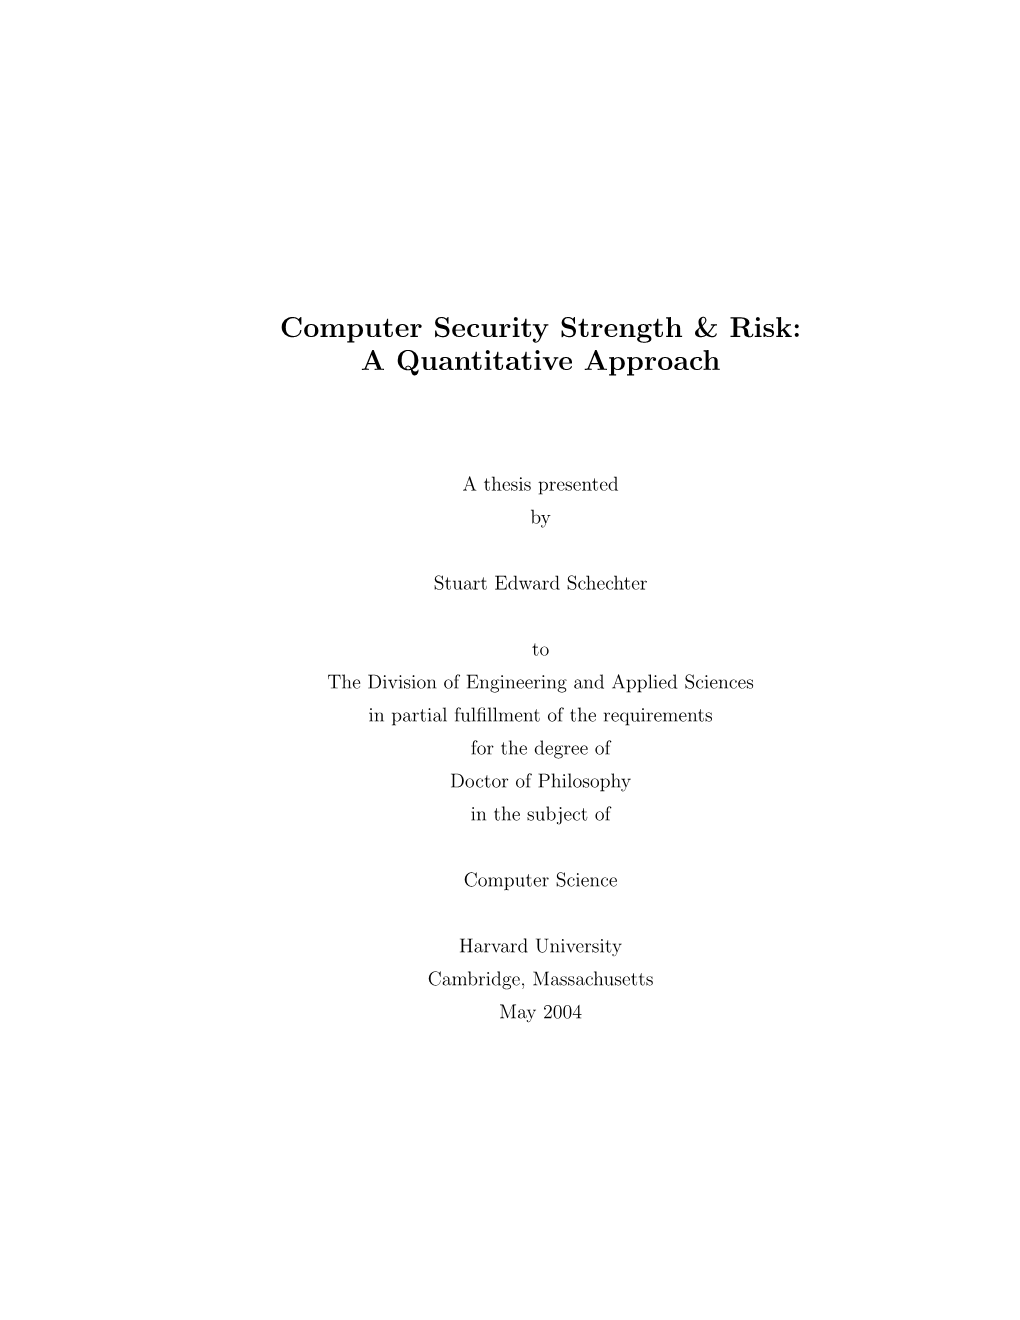 Computer Security Strength & Risk: a Quantitative Approach